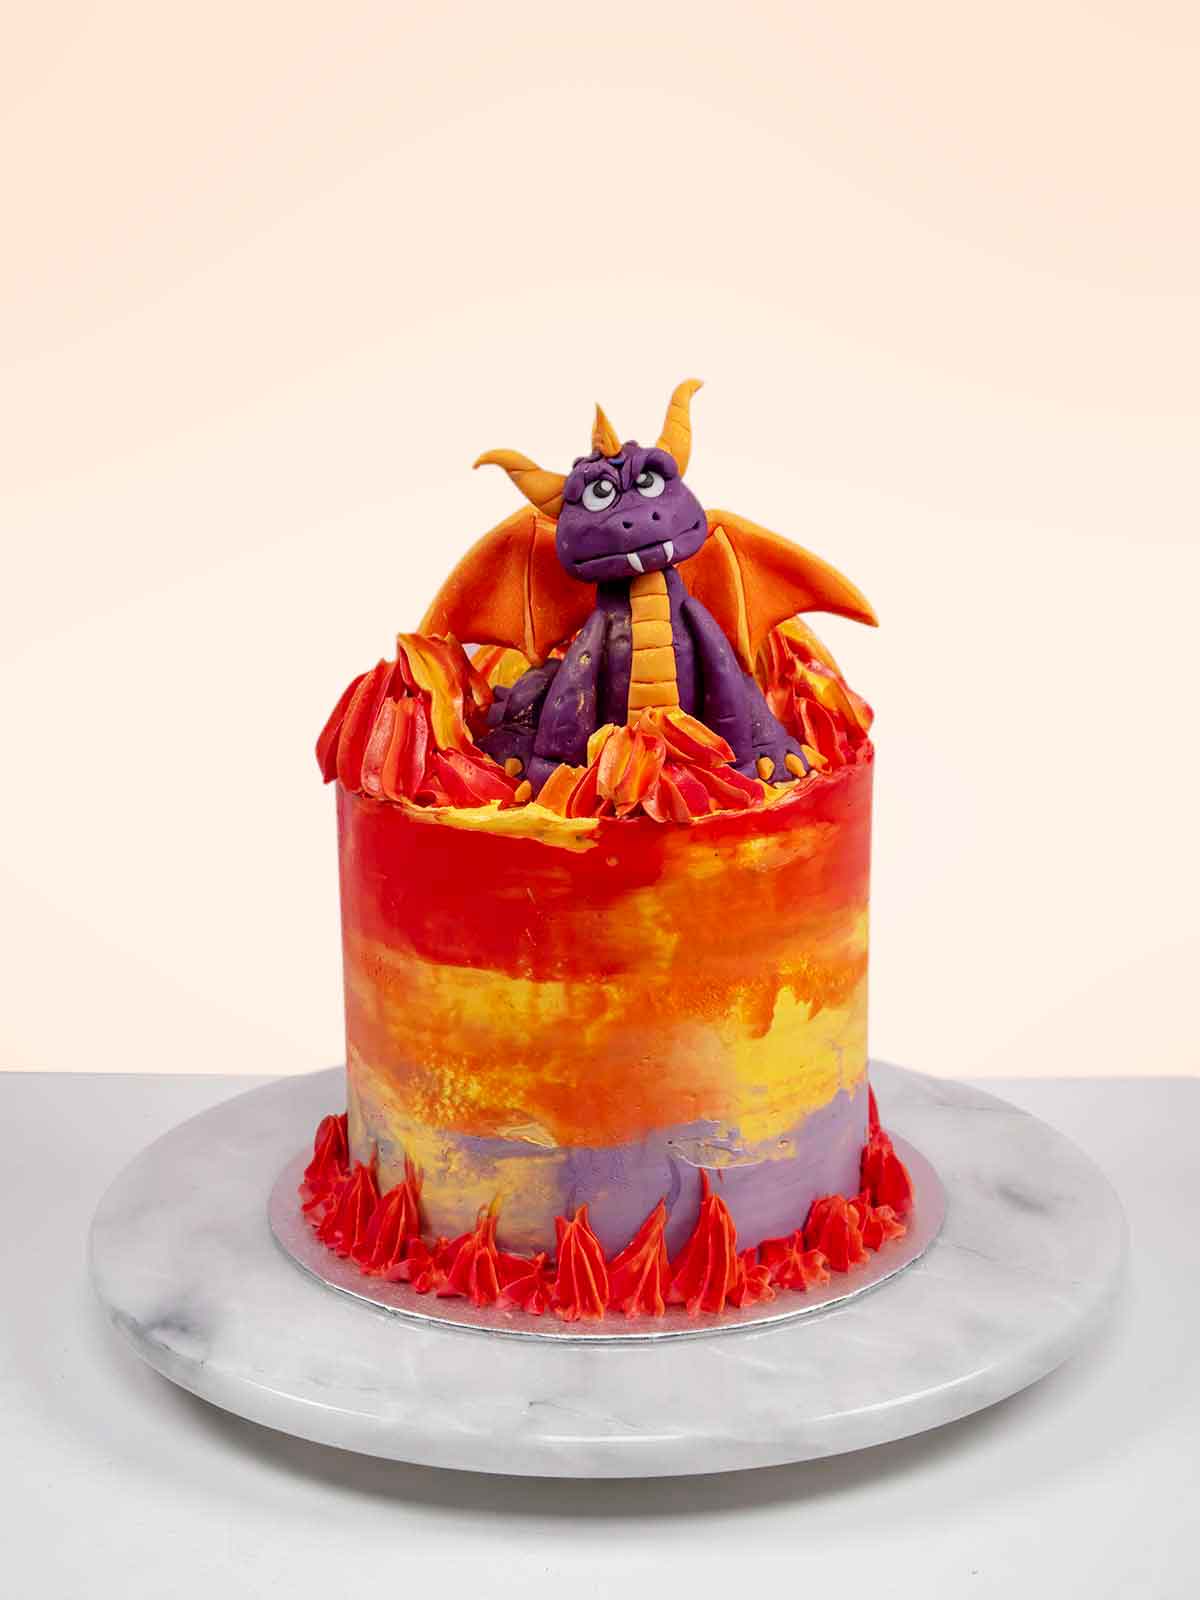 Mighty Dragon assault cake